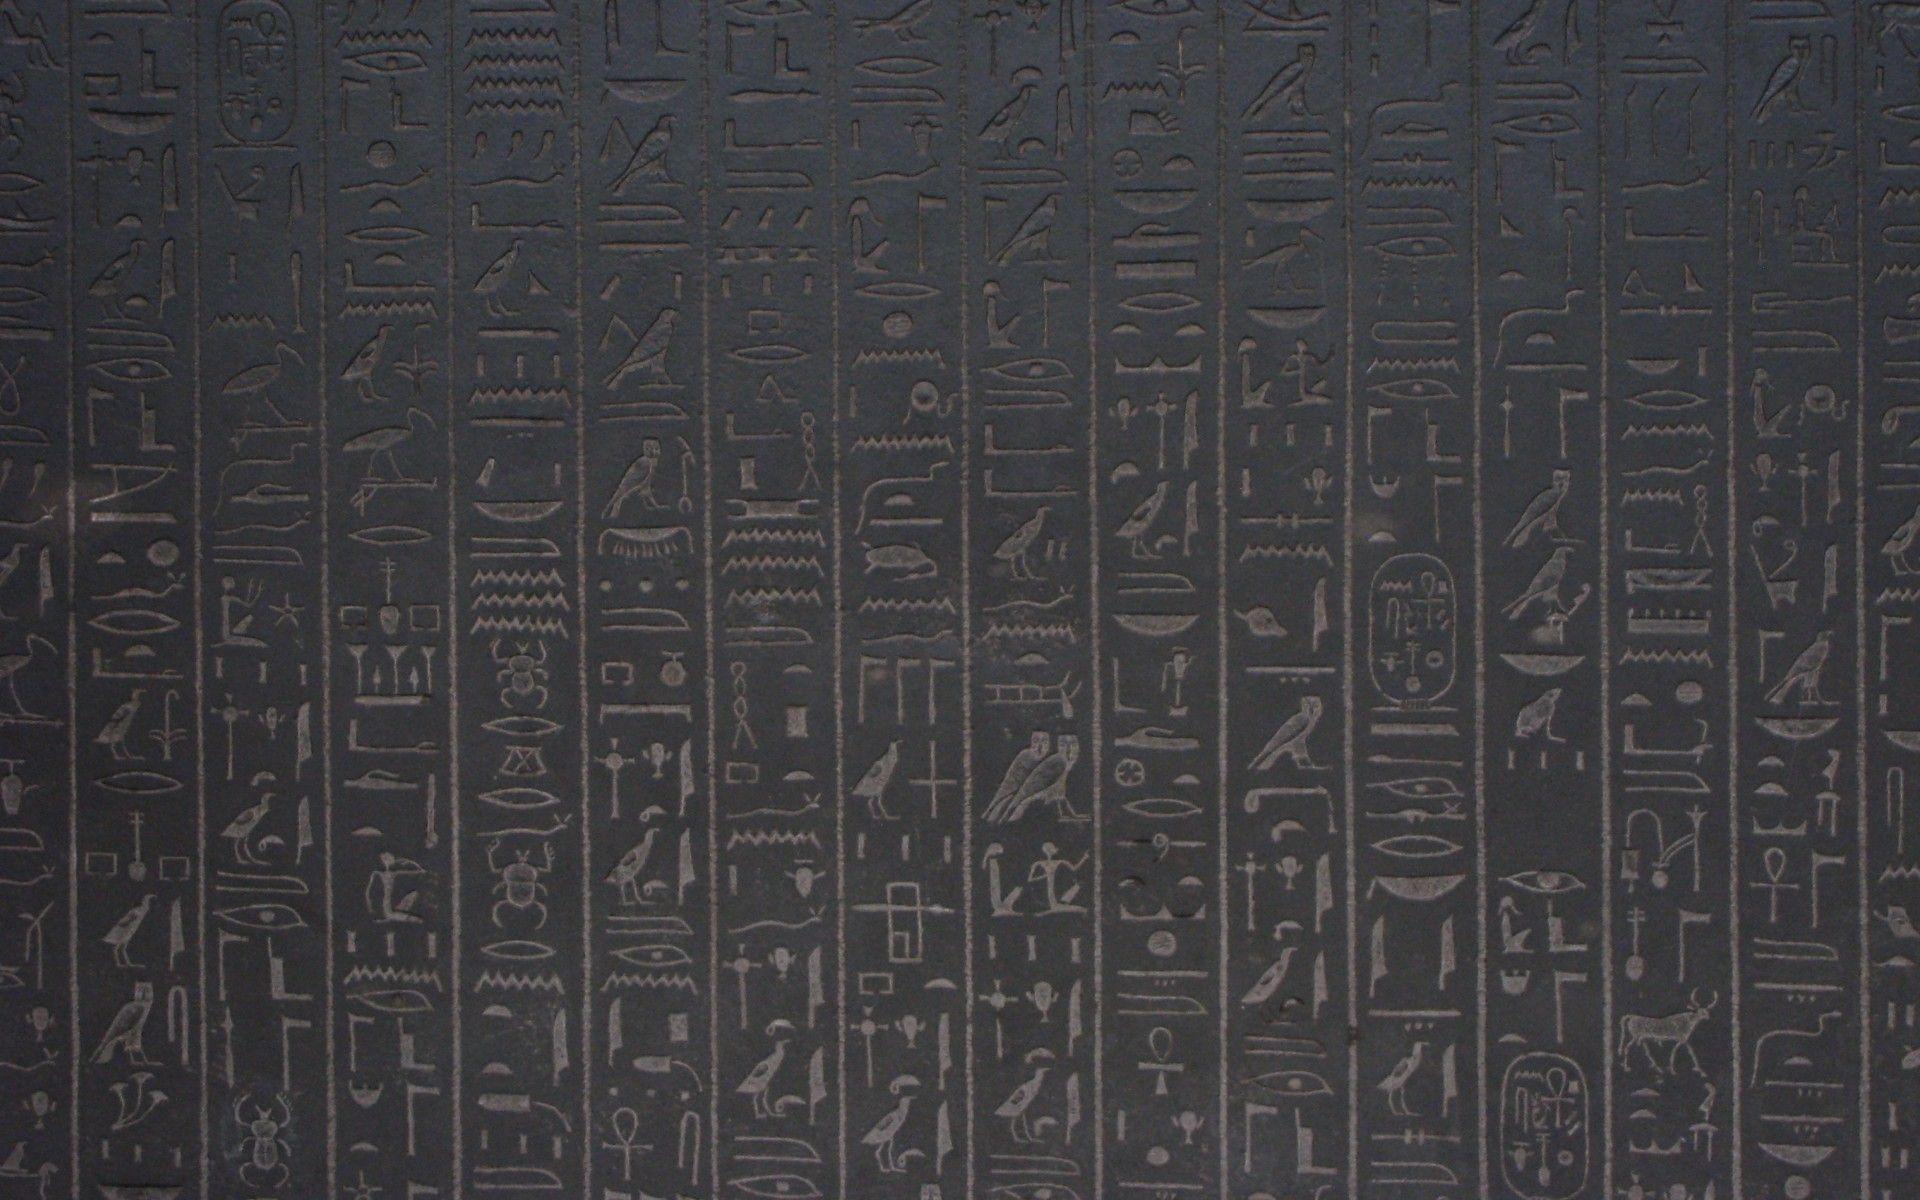 Egyptian Hieroglyphs Wallpapers - Wallpaper Cave1920 x 1200